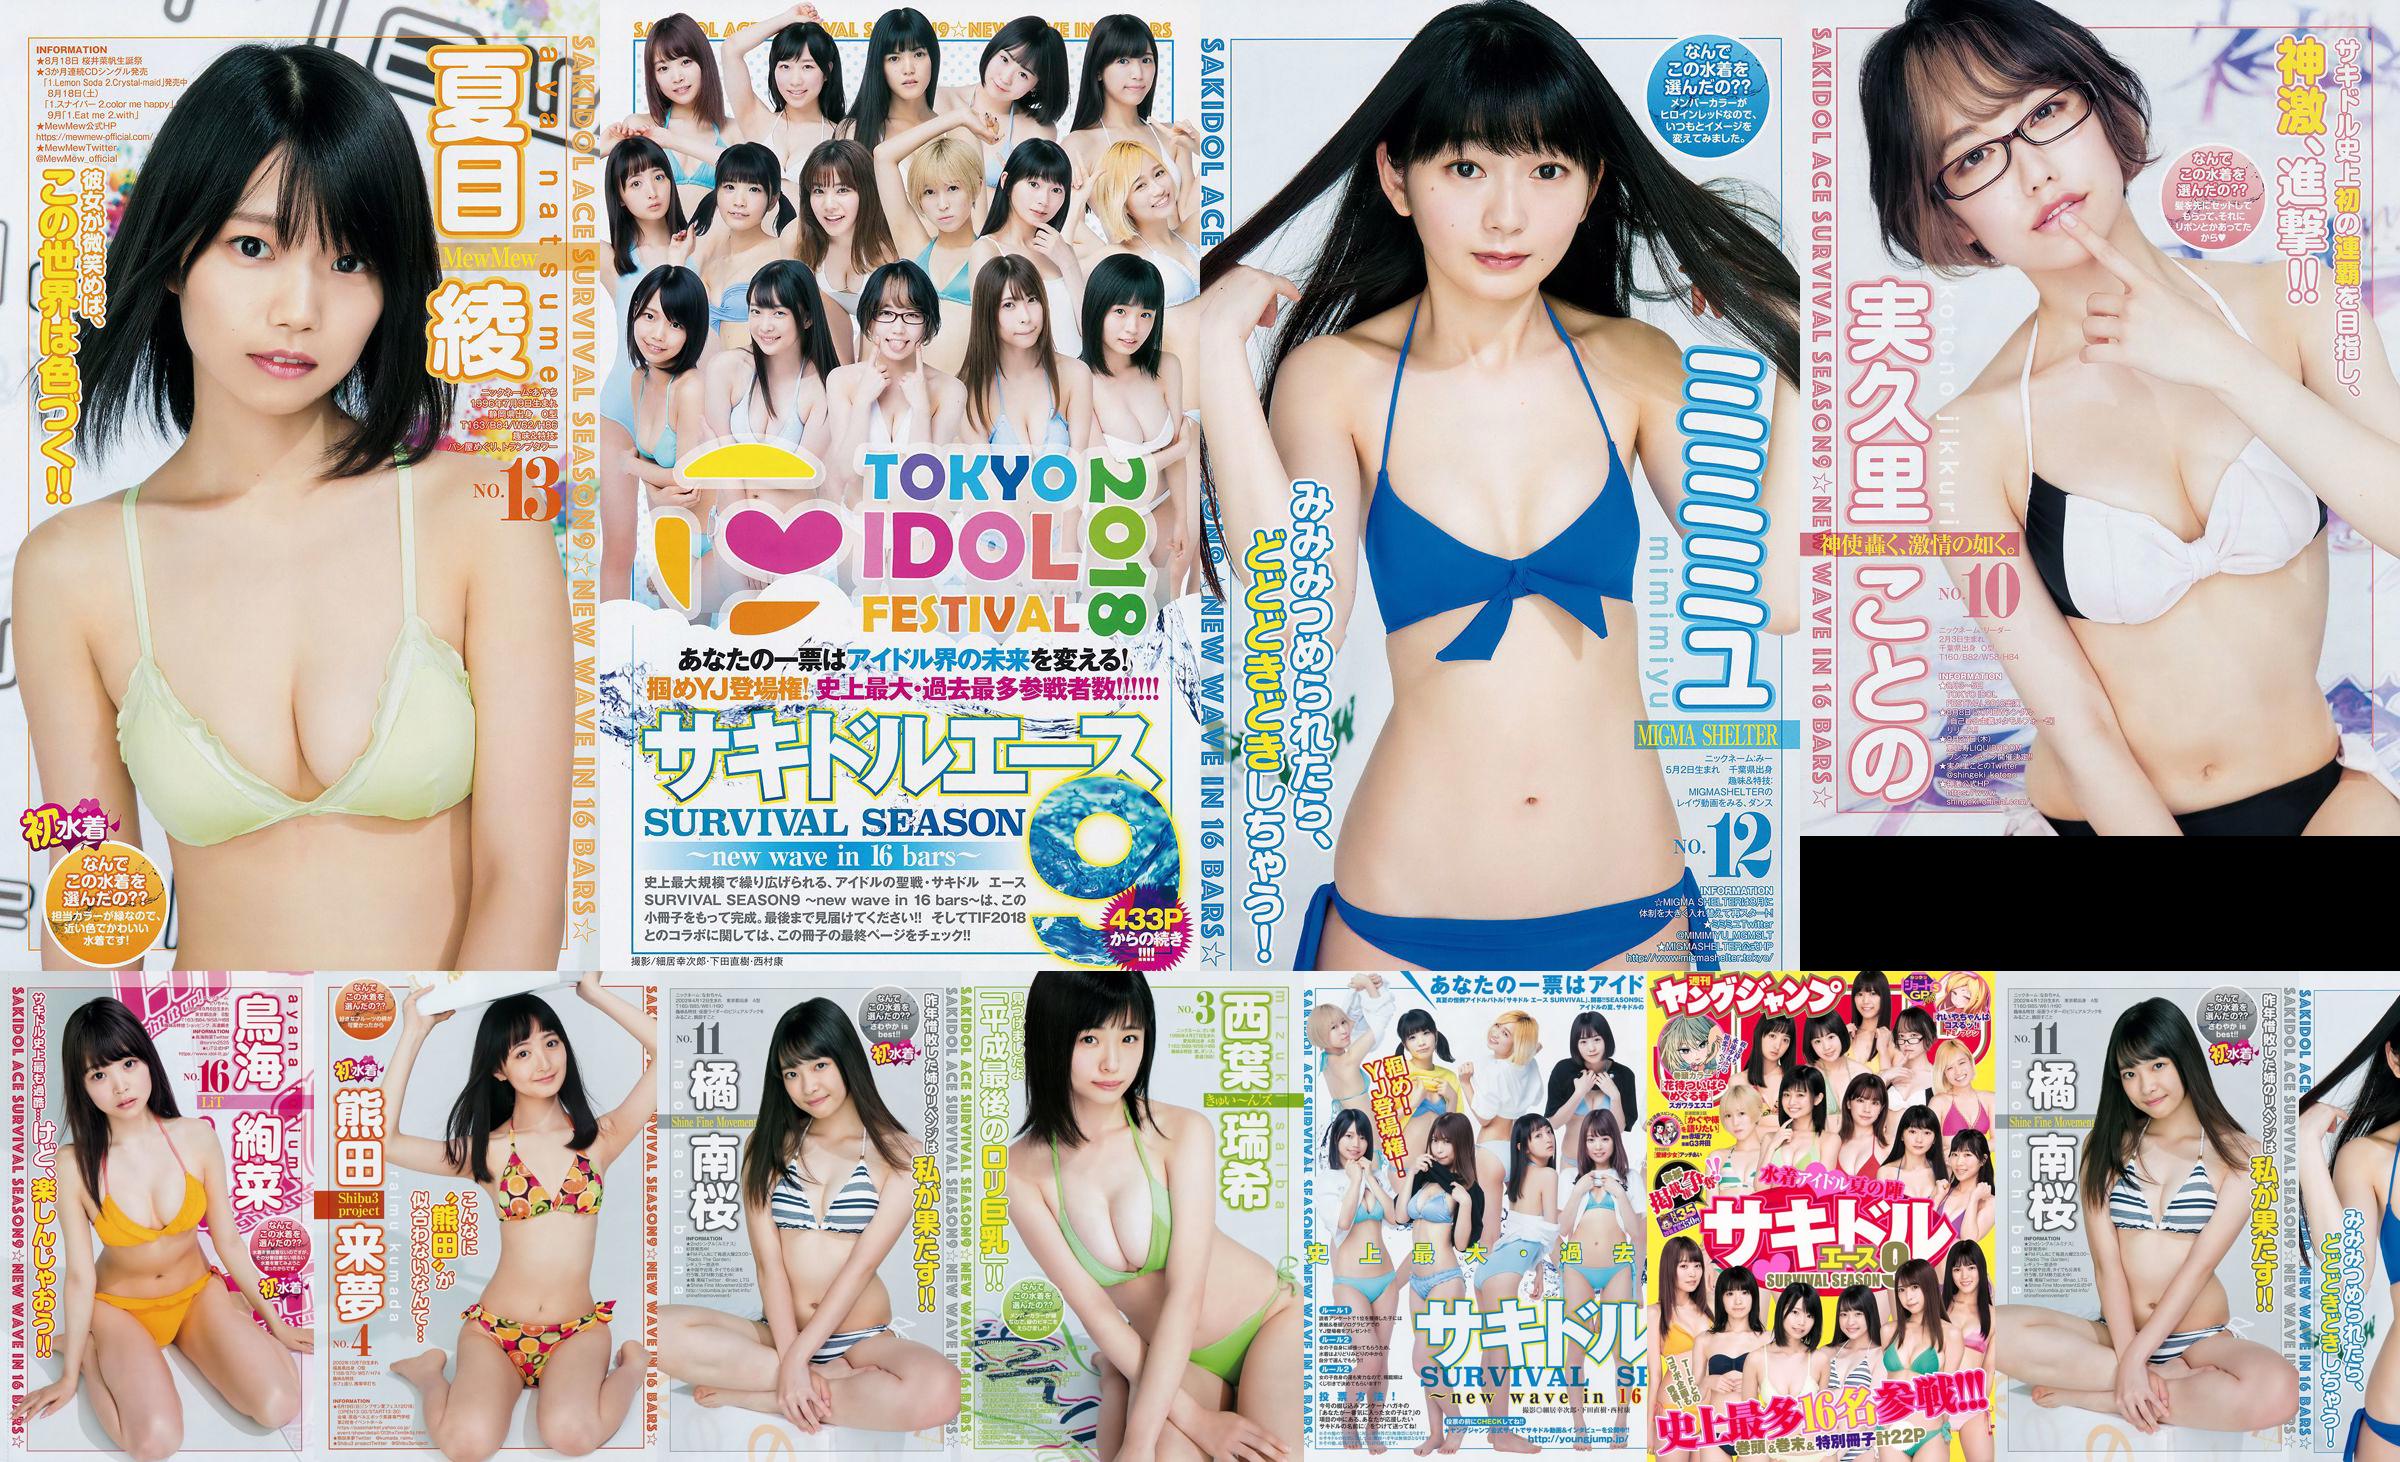 [FLASH] Ikumi Hisamatsu Risa Hirako Ren Ishikawa Angel Moe AKB48 Kaho Shibuya Misuzu Hayashi Ririka 2015.04.21 รูปภาพ Toshi No.59d441 หน้า 1